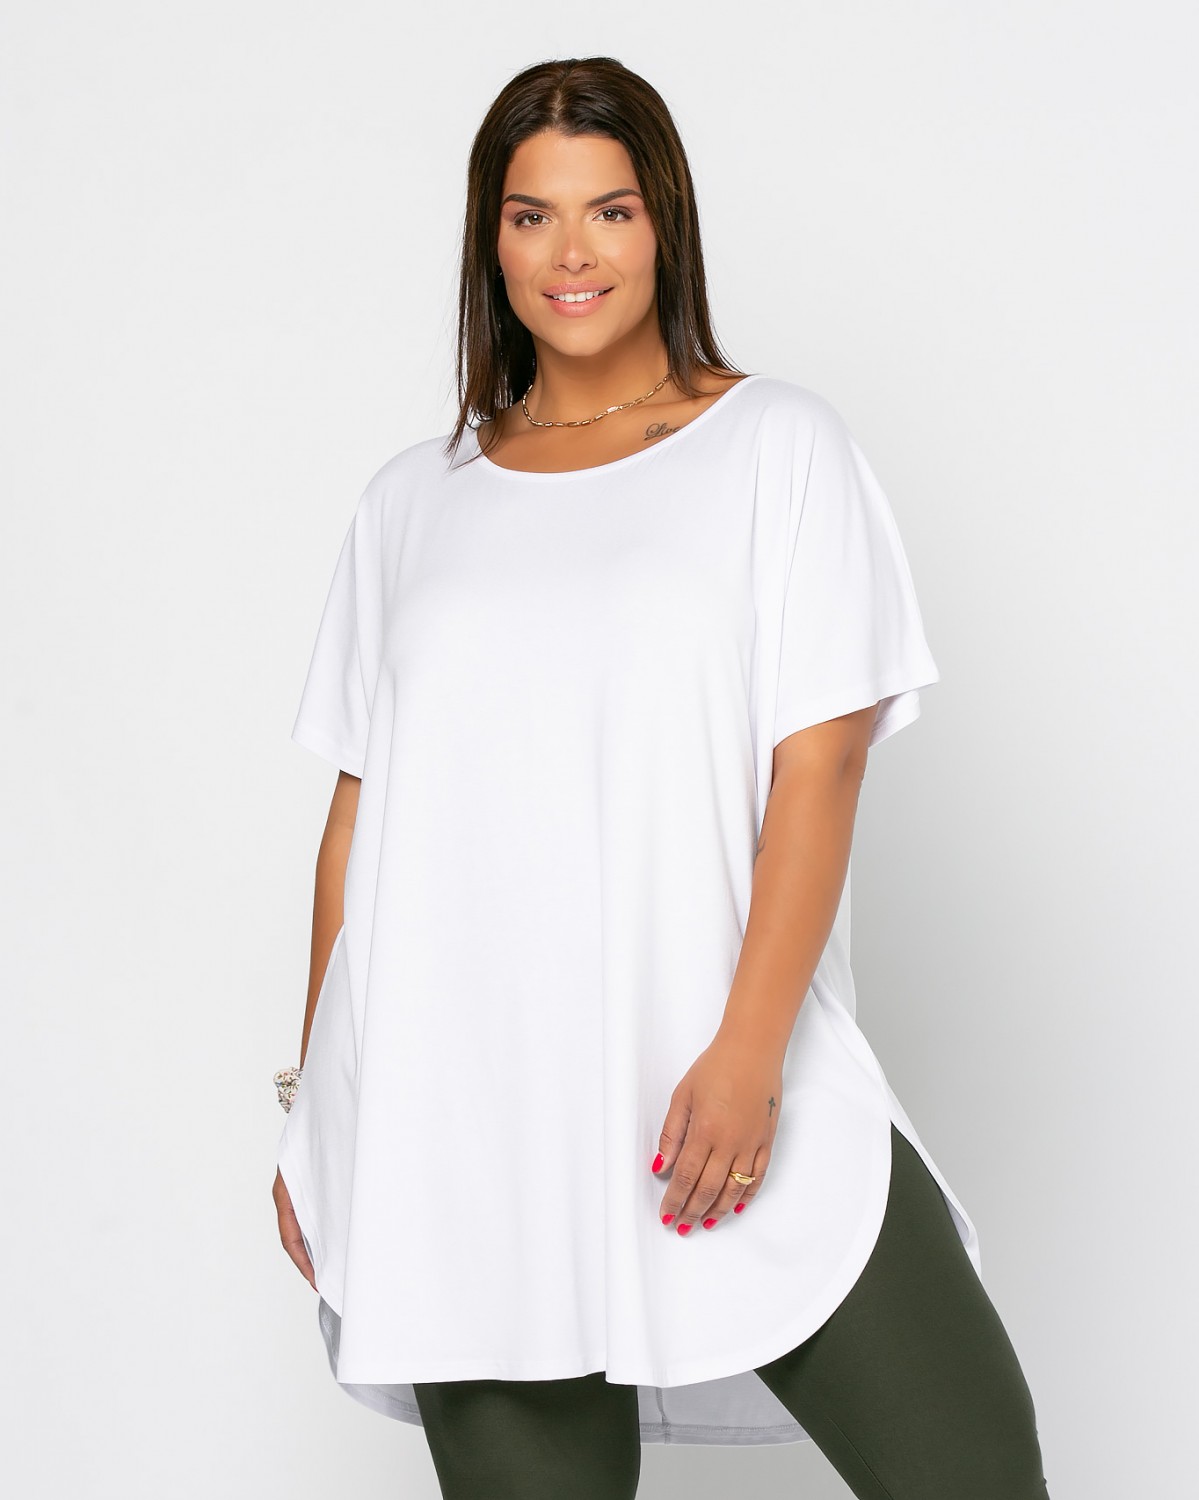 Elise Τ-Shirt Λευκό